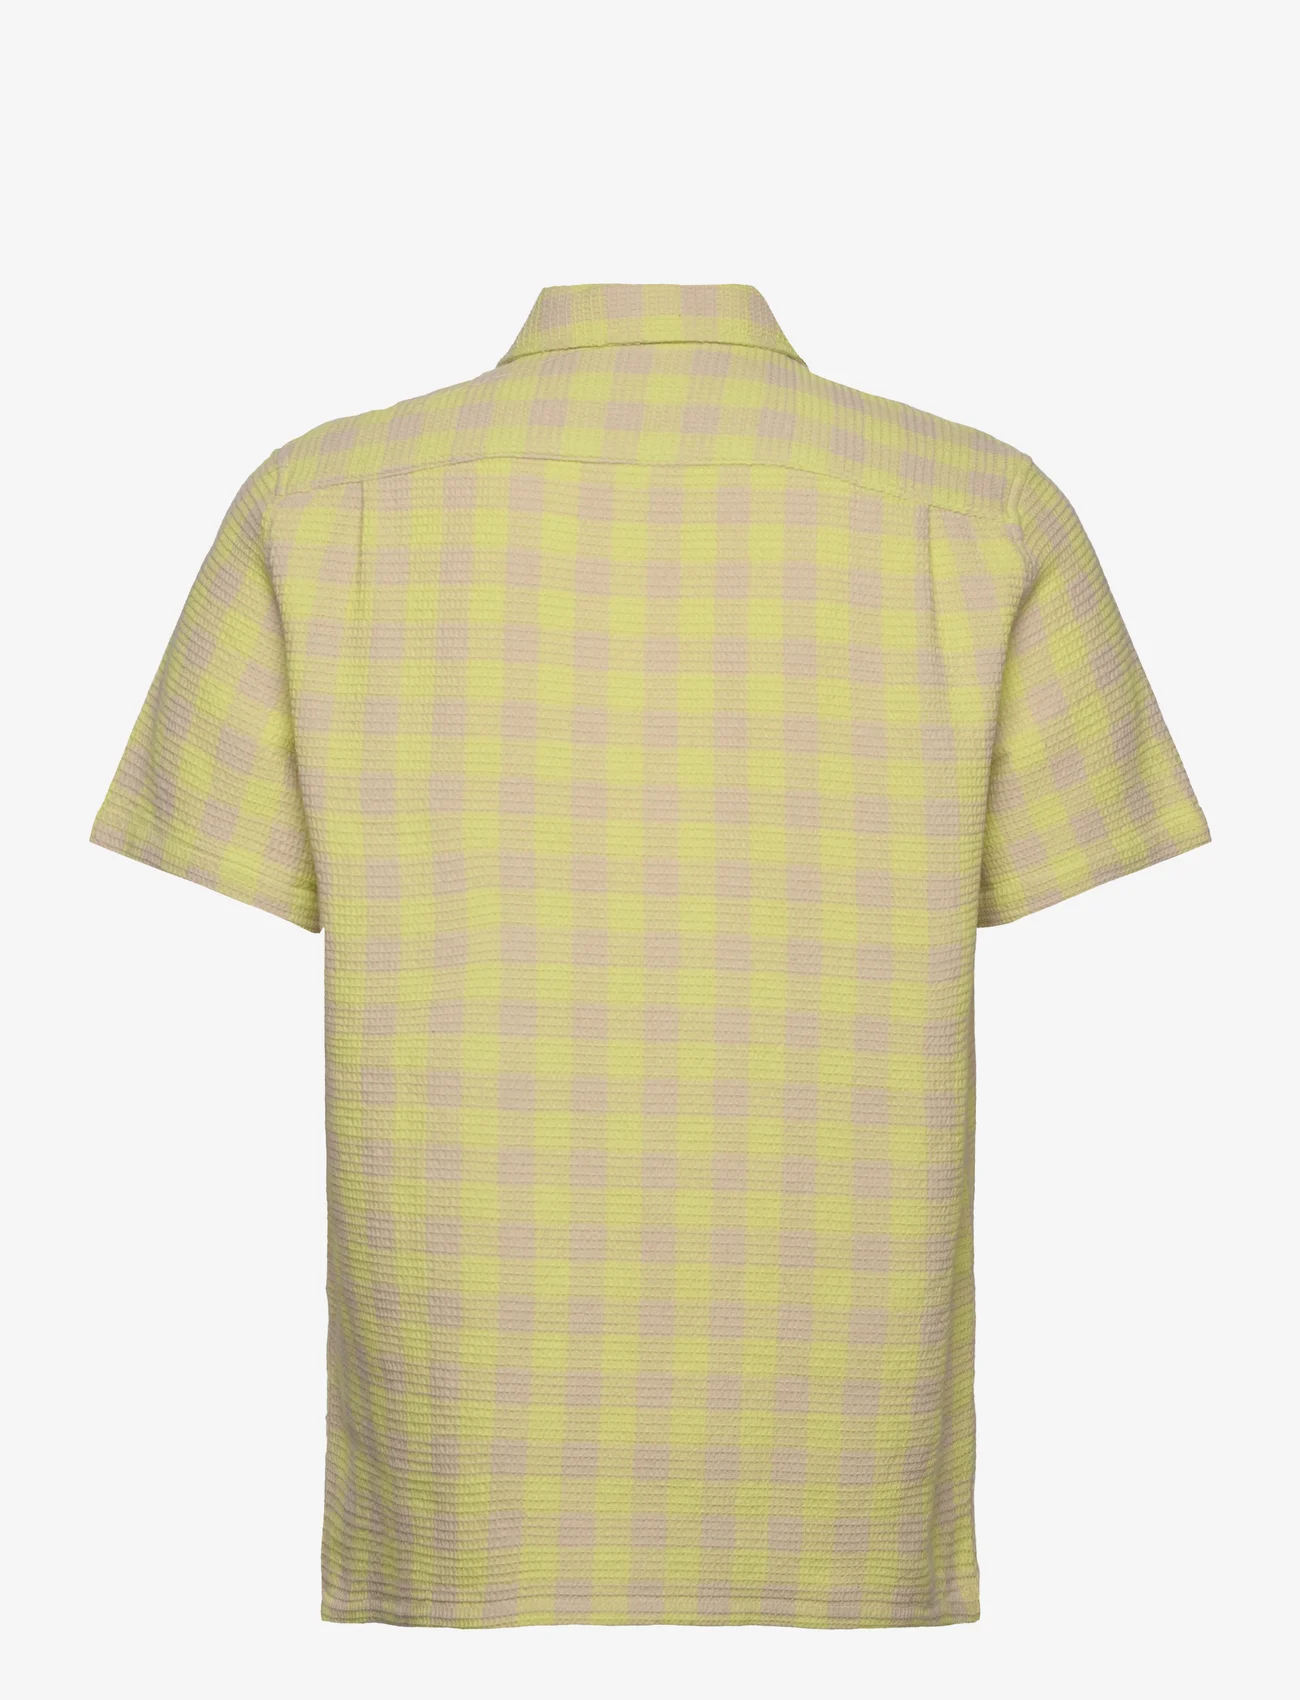 Samsøe Samsøe - Avan JJ shirt 14685 - koszule w kratkę - daiquiri green ch. - 1